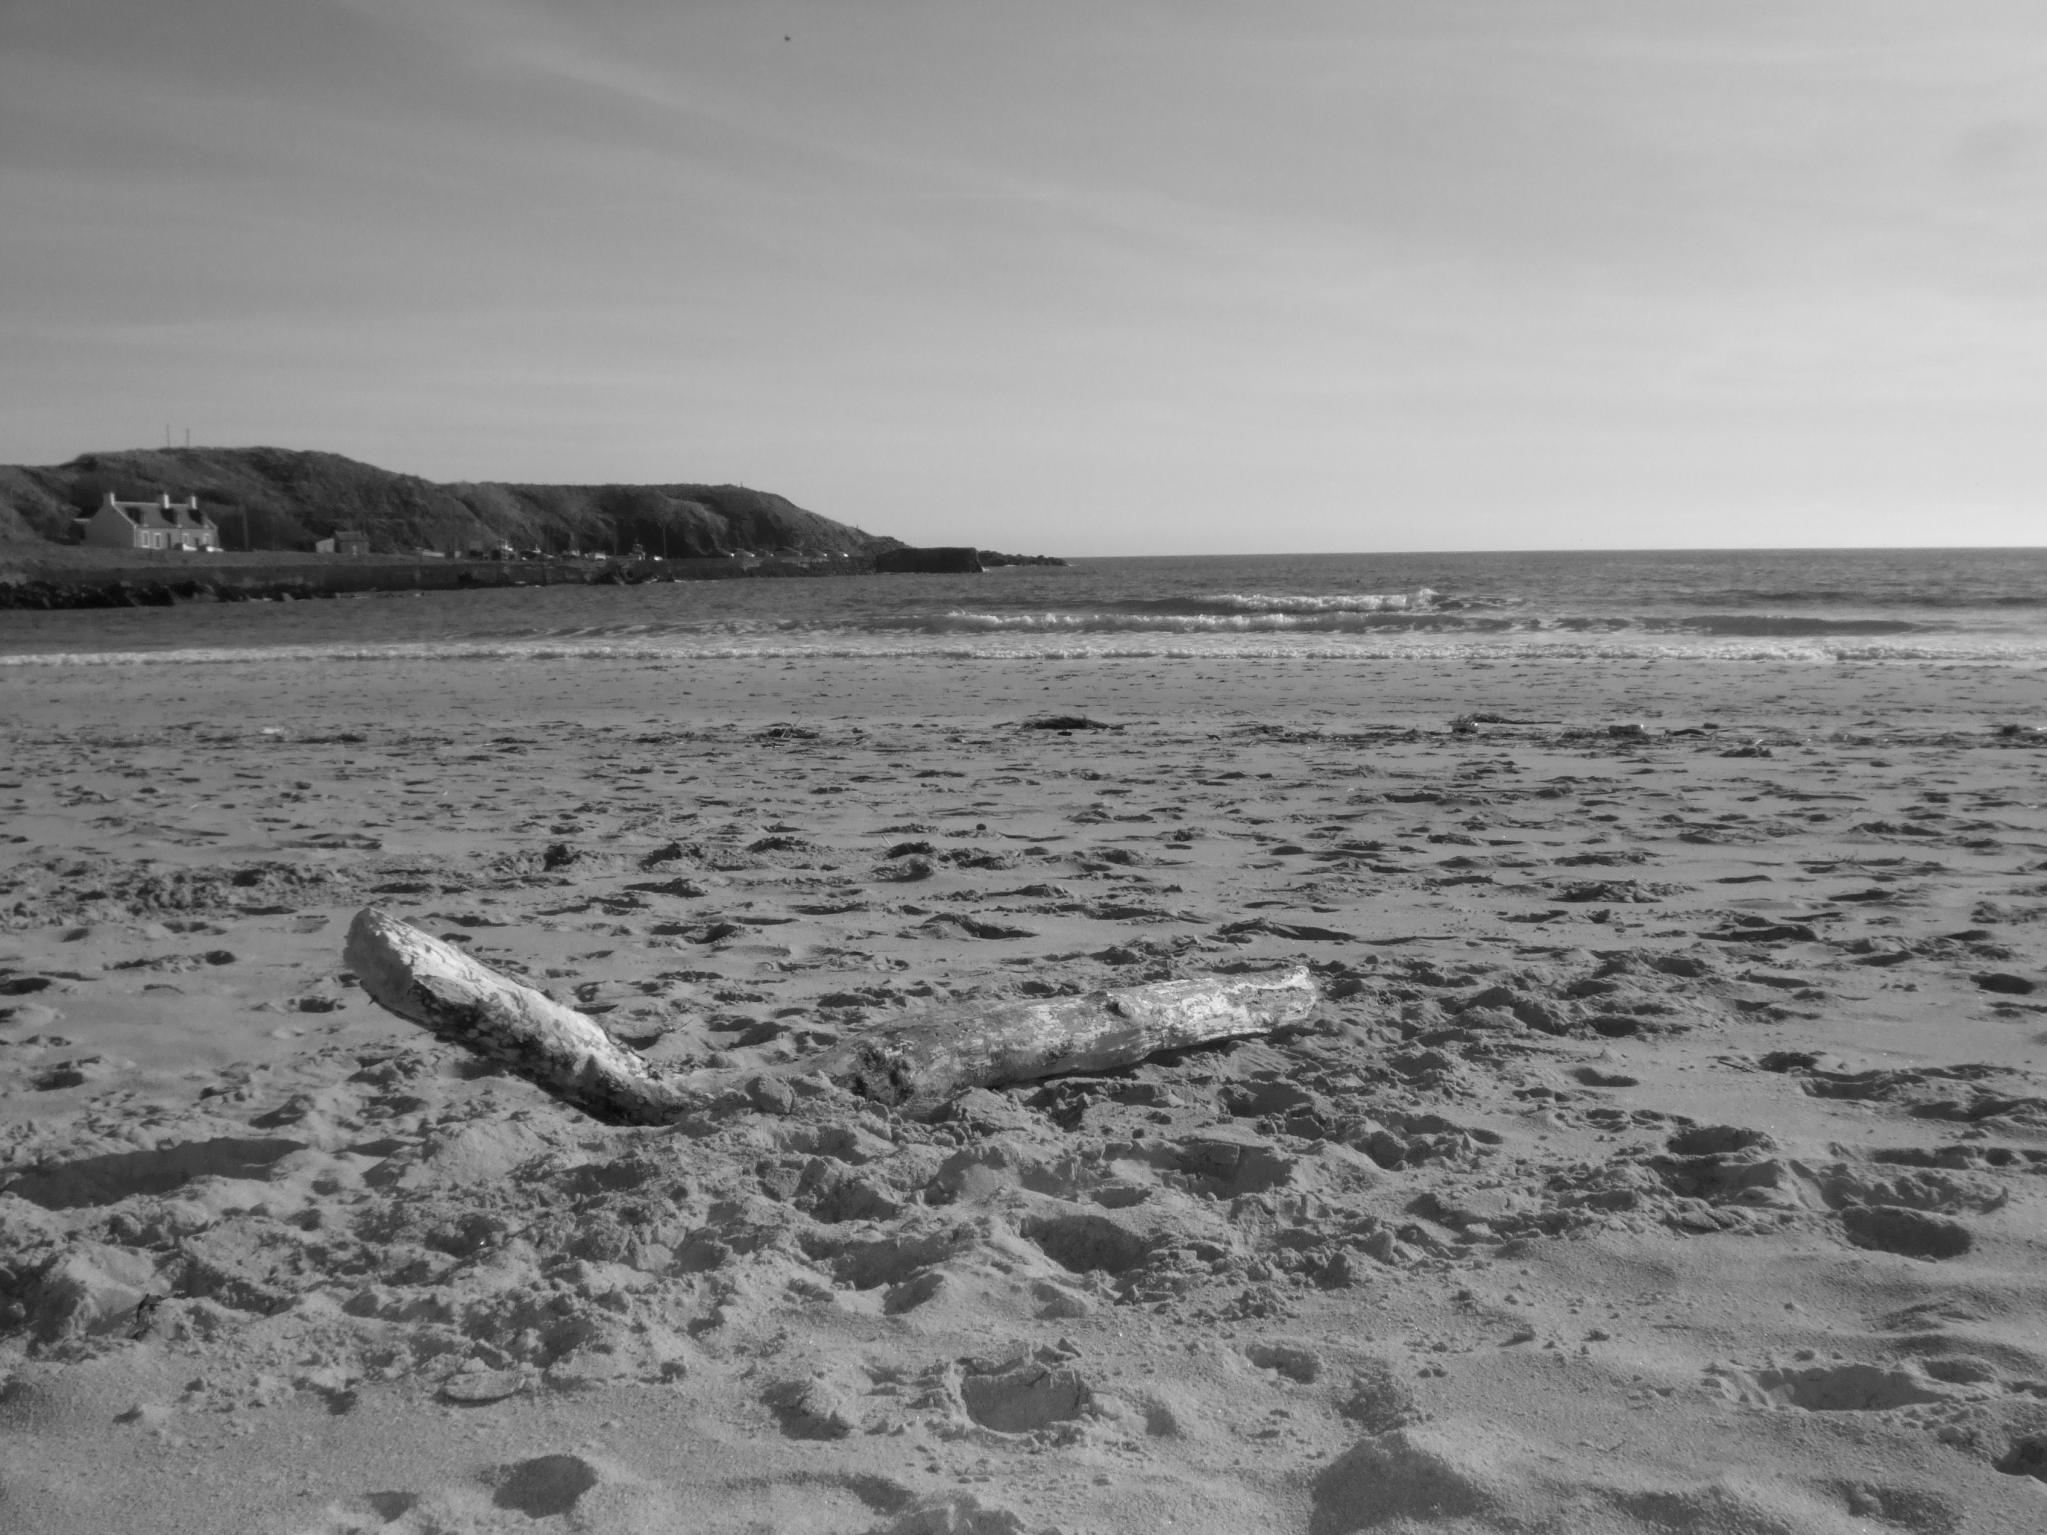 Photograph: Beach Log